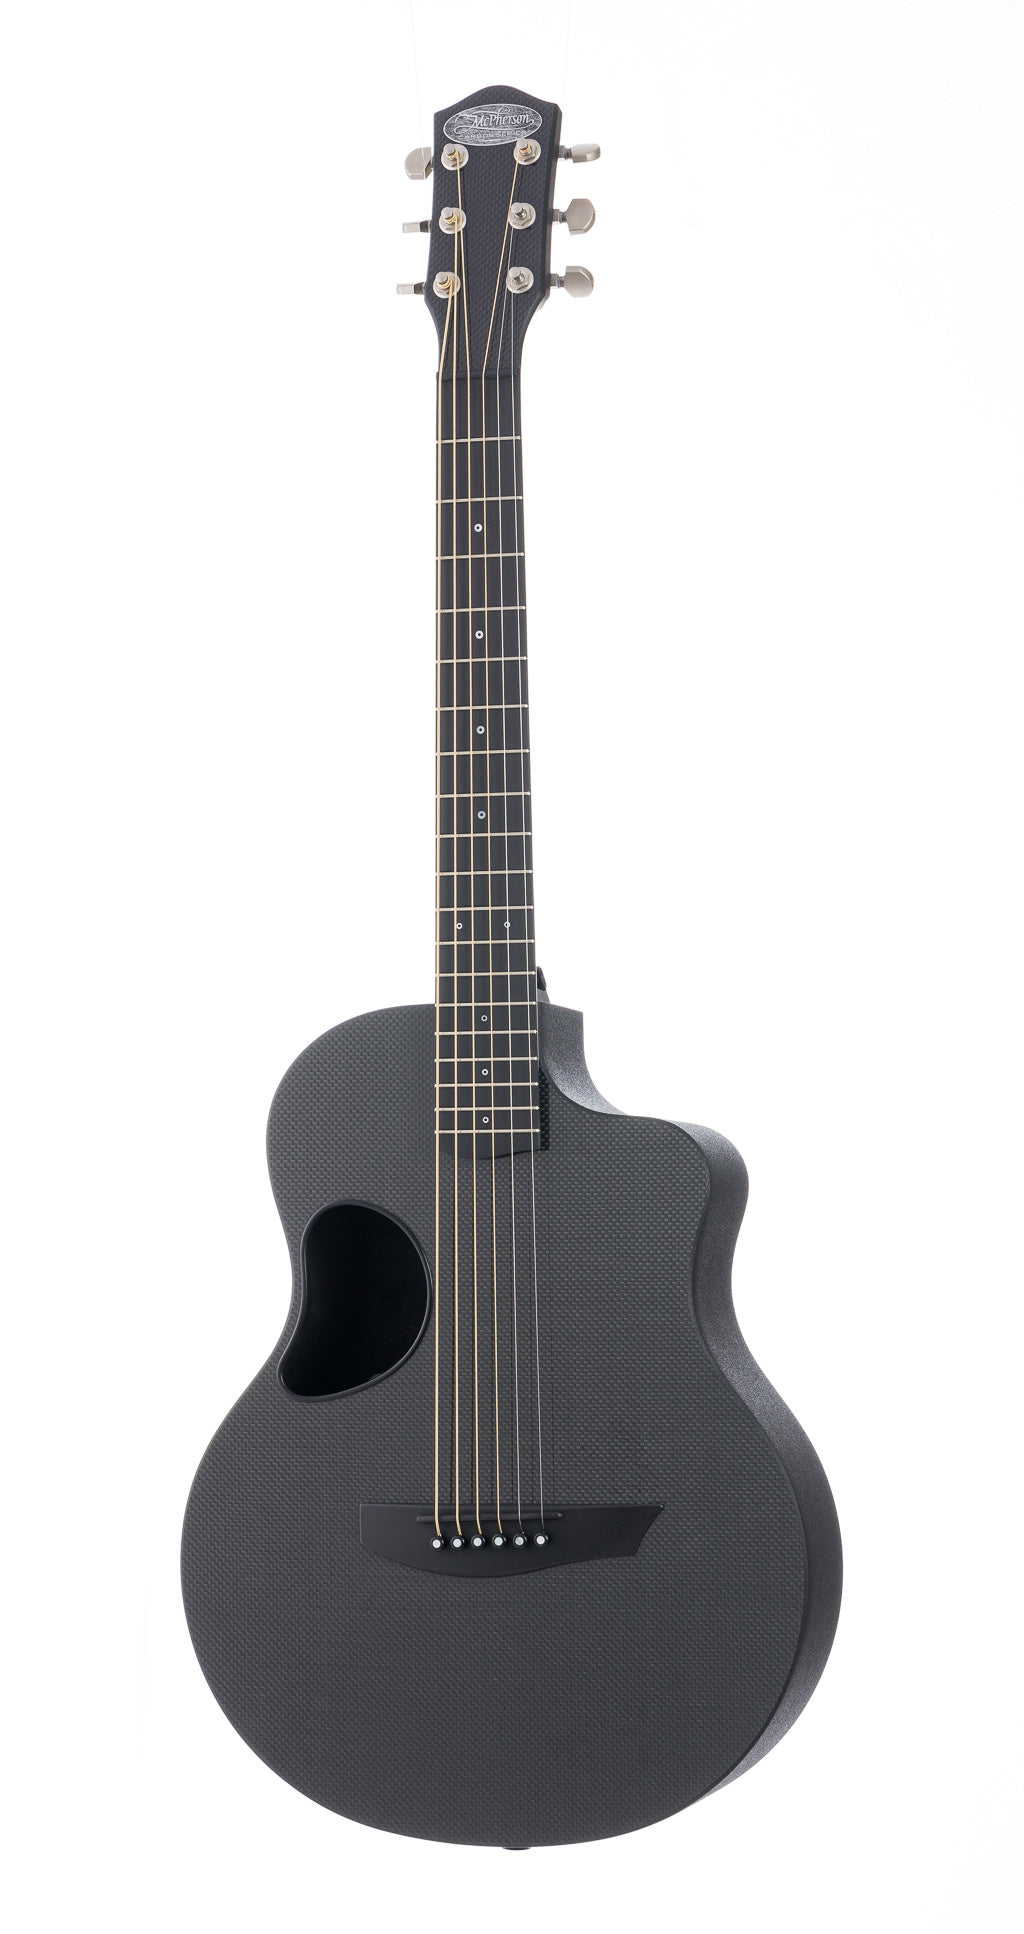 McPherson Touring Carbon Fiber Guitar - Standard Top, Black Binding (329)